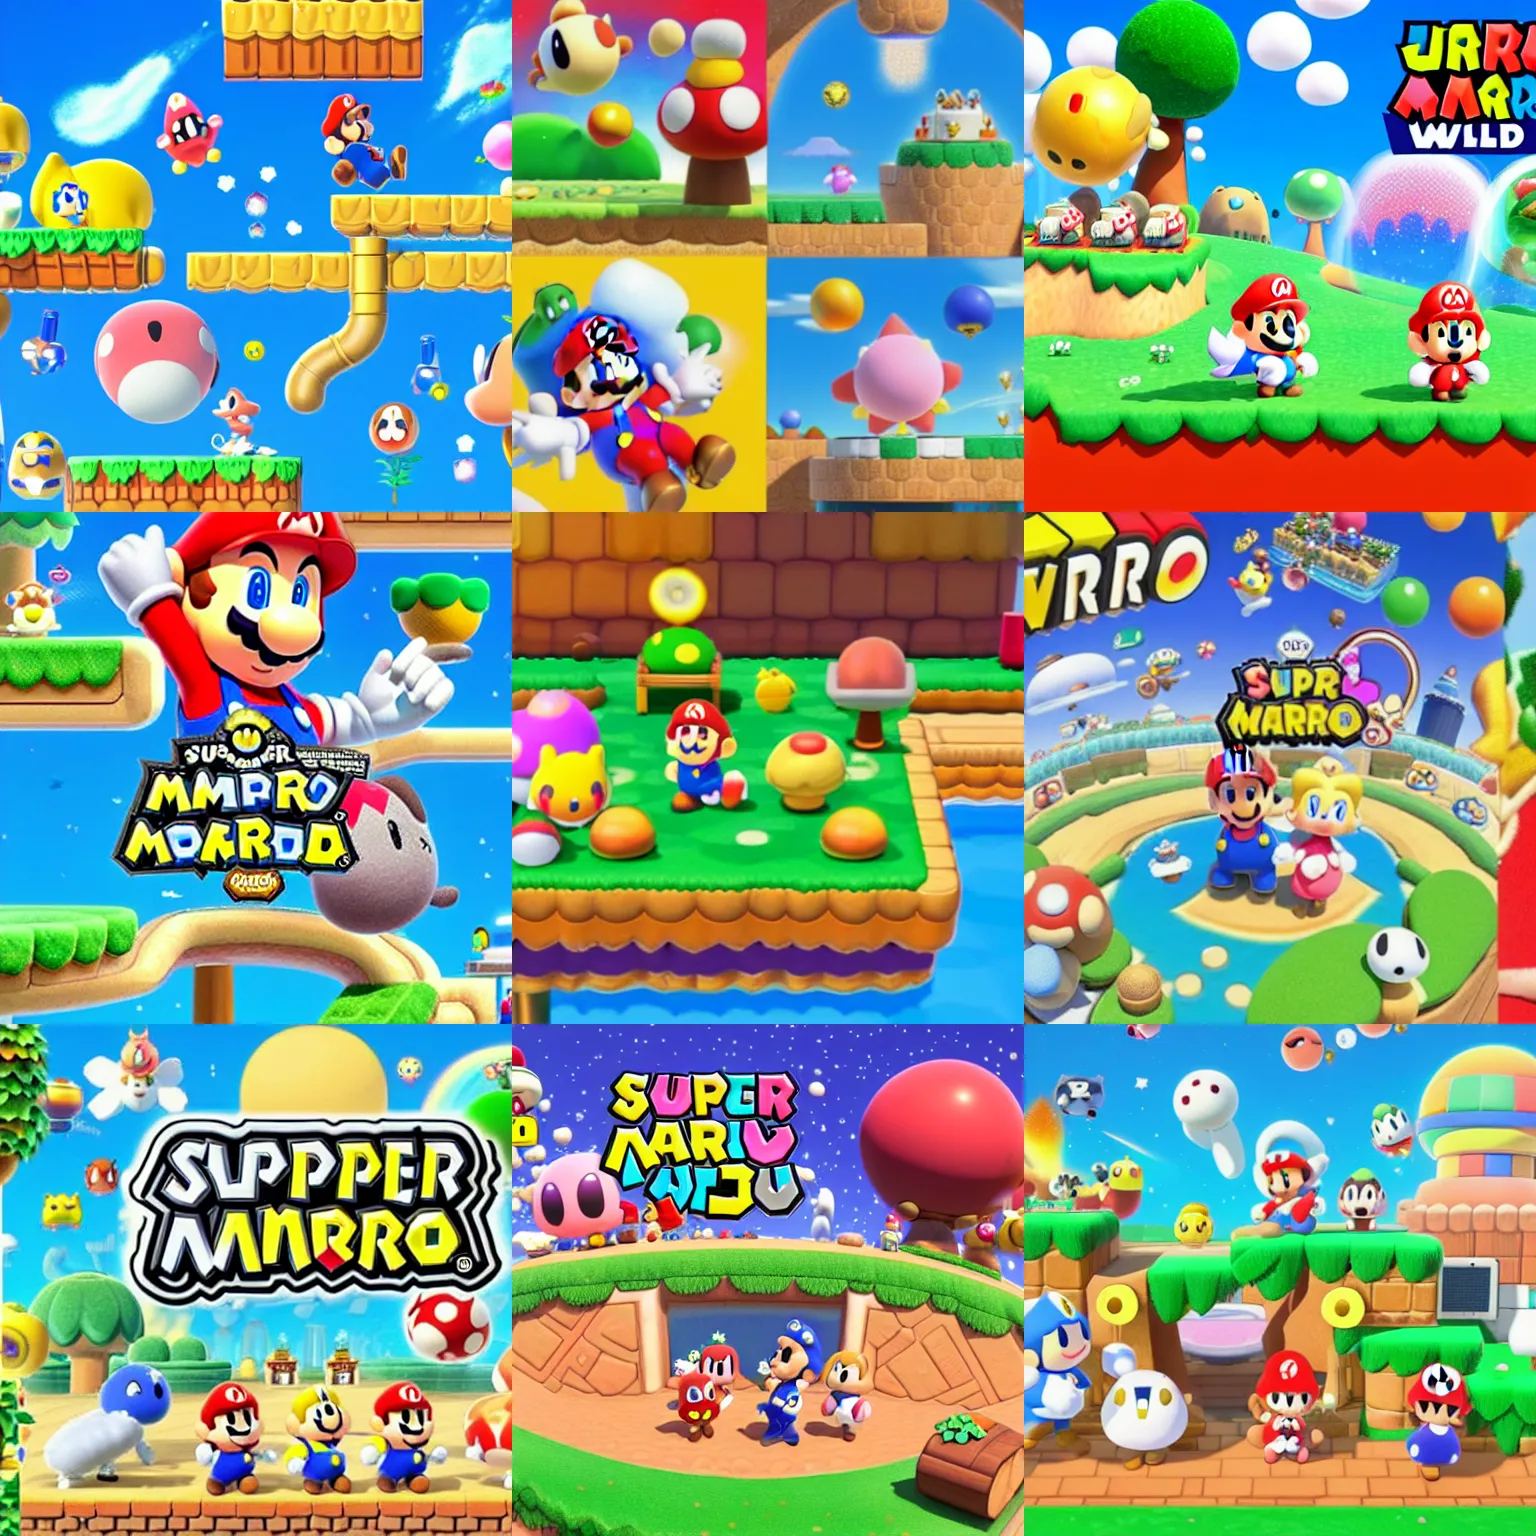 Prompt: Super Mario Galaxy new super Mario bros world Kirby dreamland animal crossing wild world